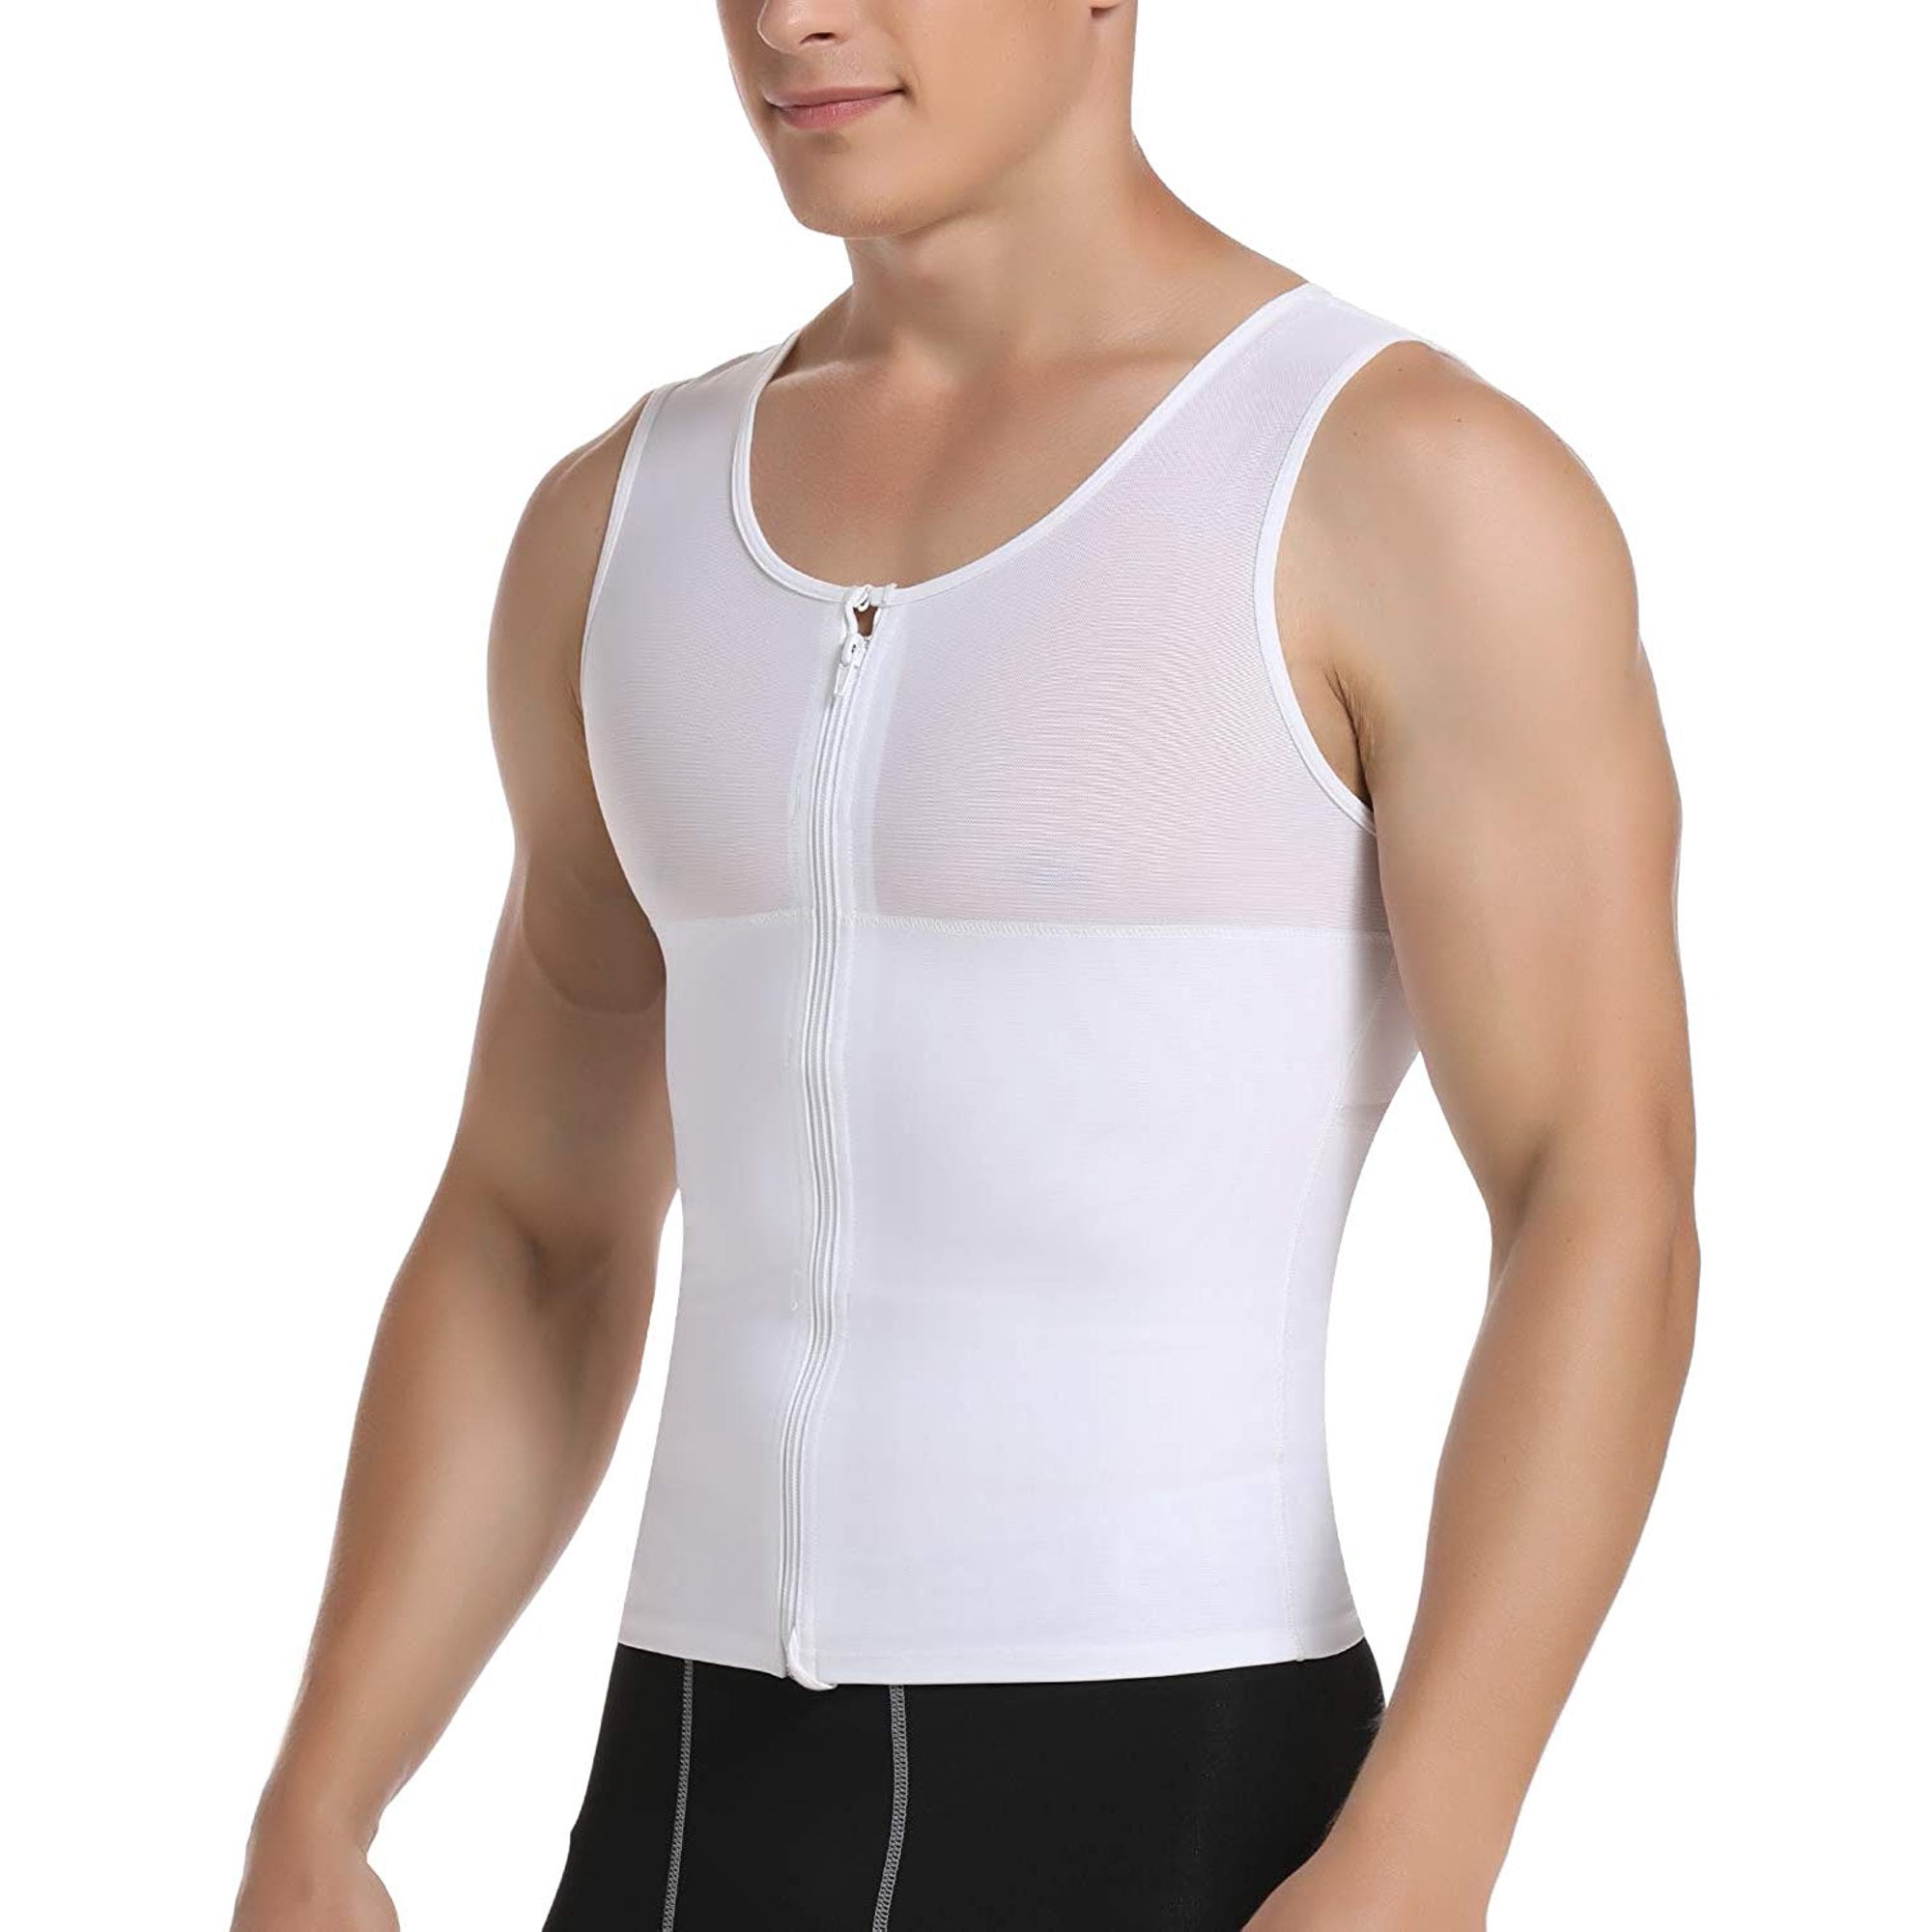 NPolar Men Heat Trapping Shirt Body Shaper Vest Pullover Sauna